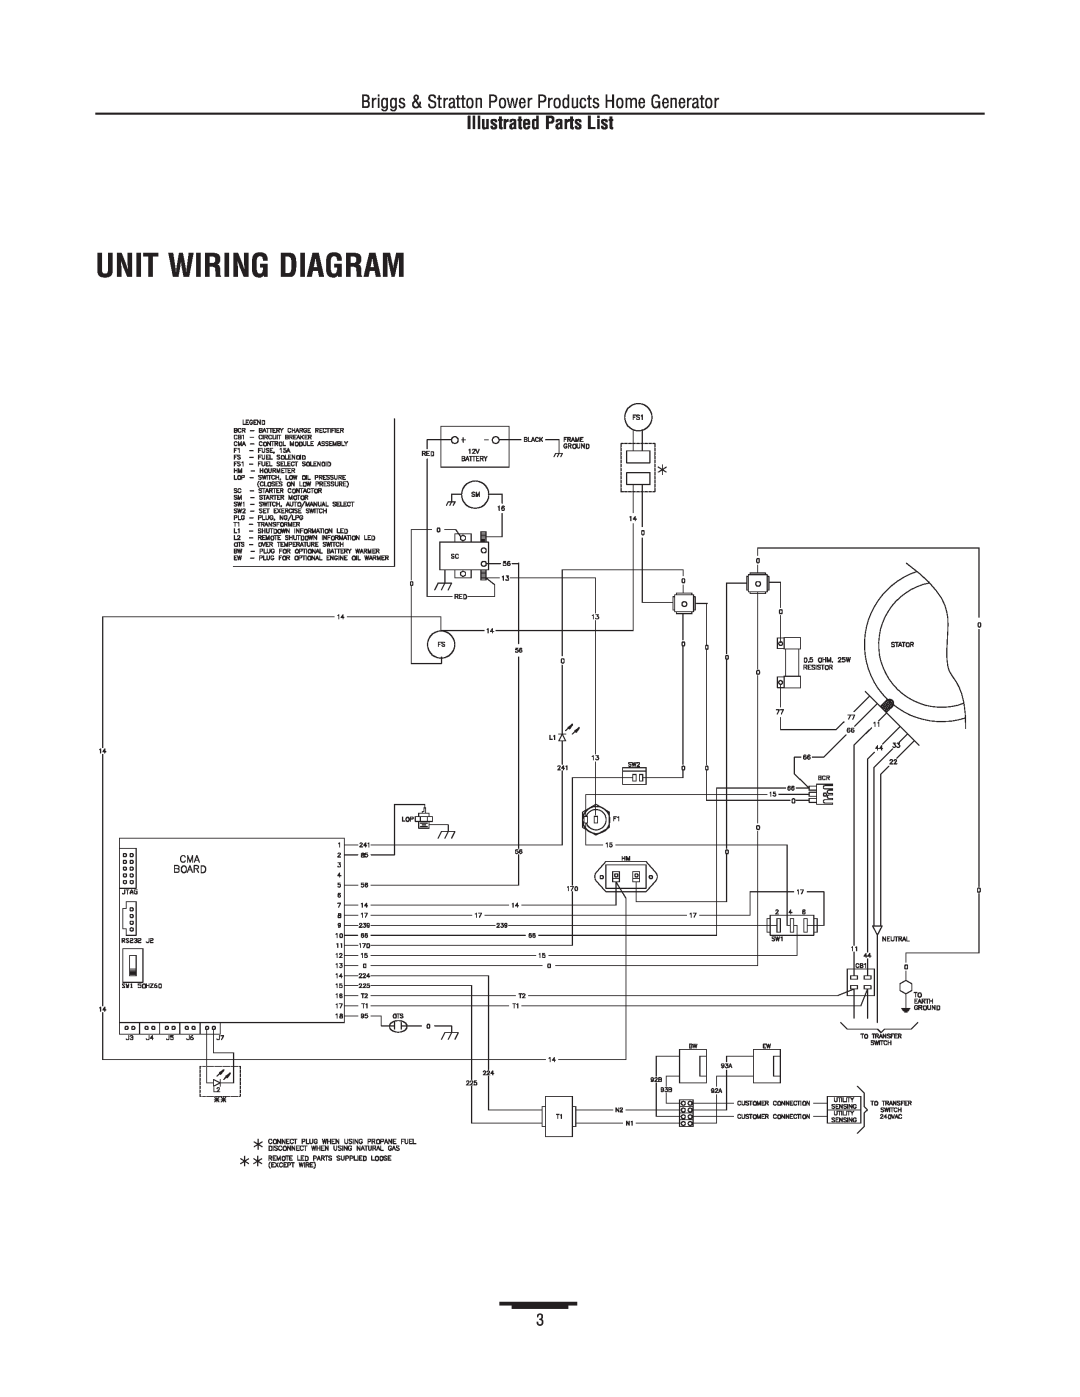 Briggs & Stratton 1815 manual Unit Wiring Diagram, Illustrated Parts List 